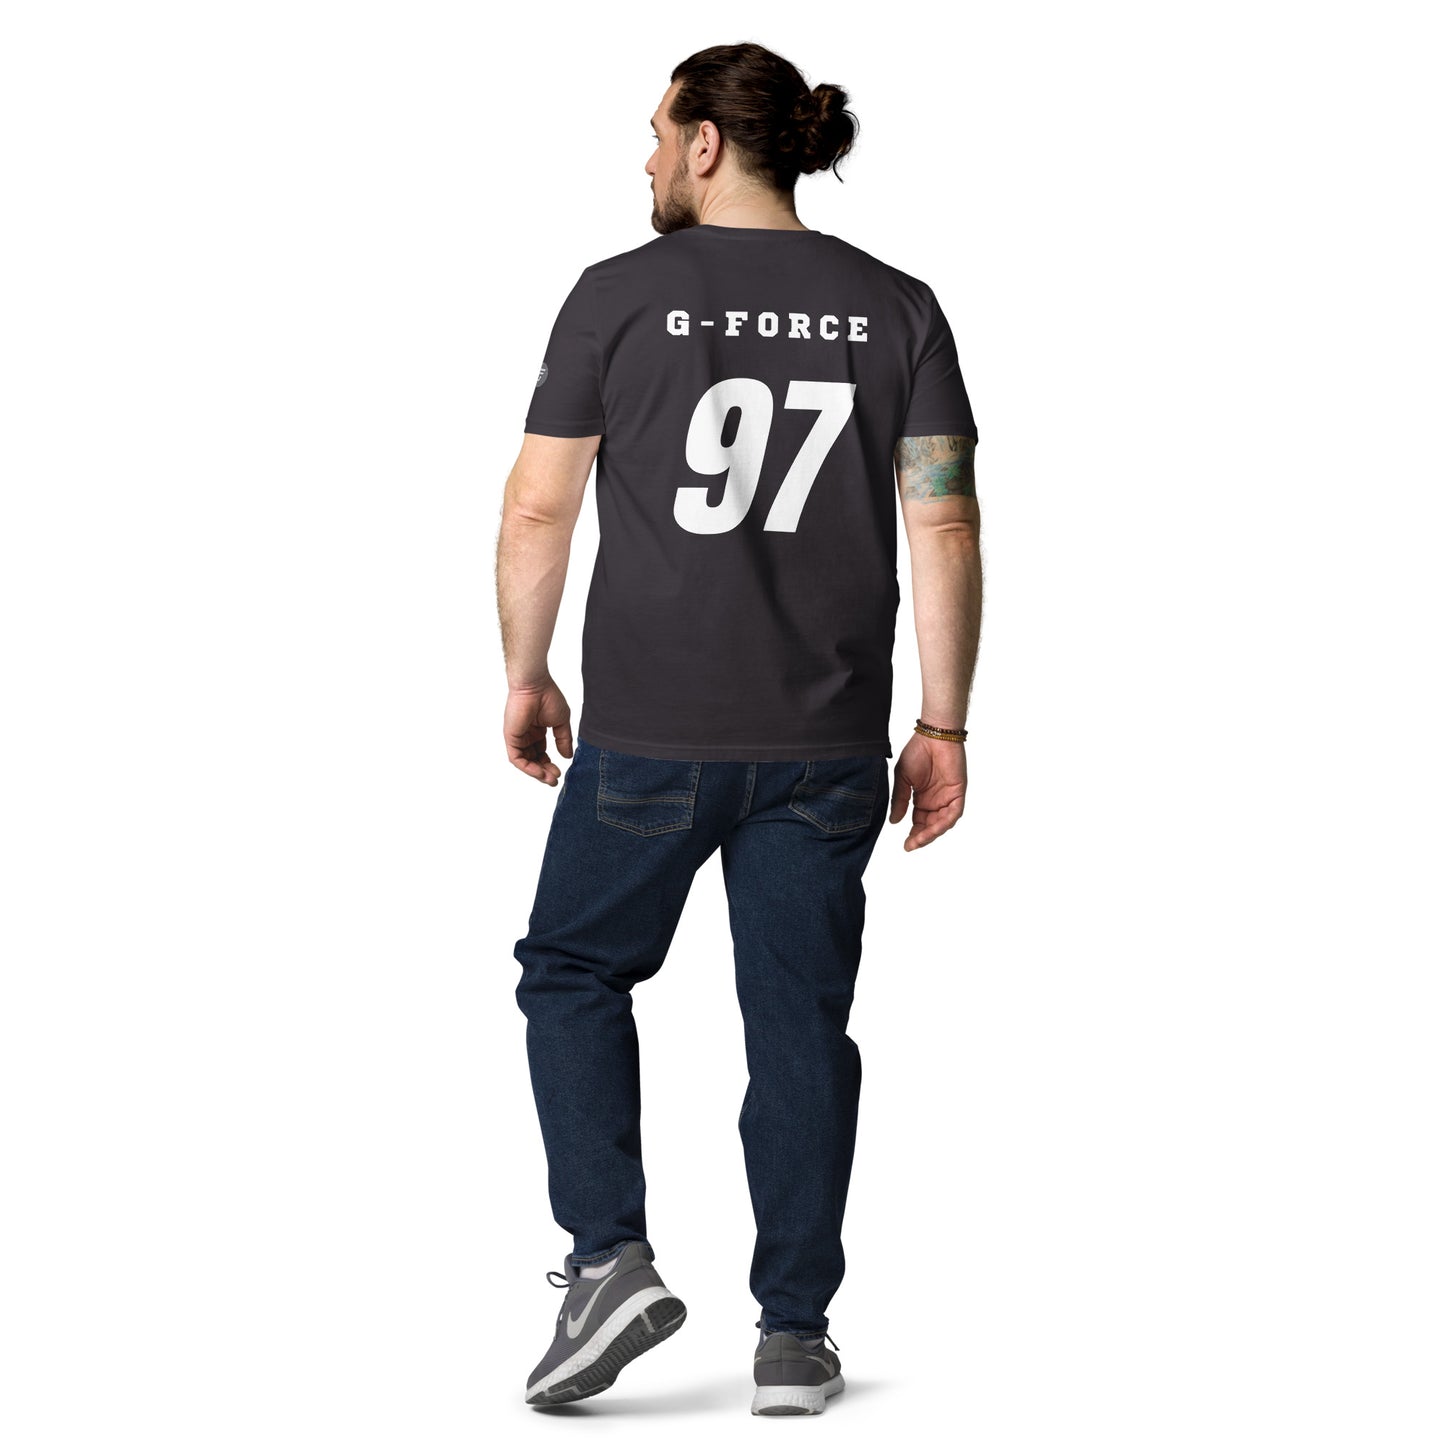 G-FORCE Apparel 97 T-shirt